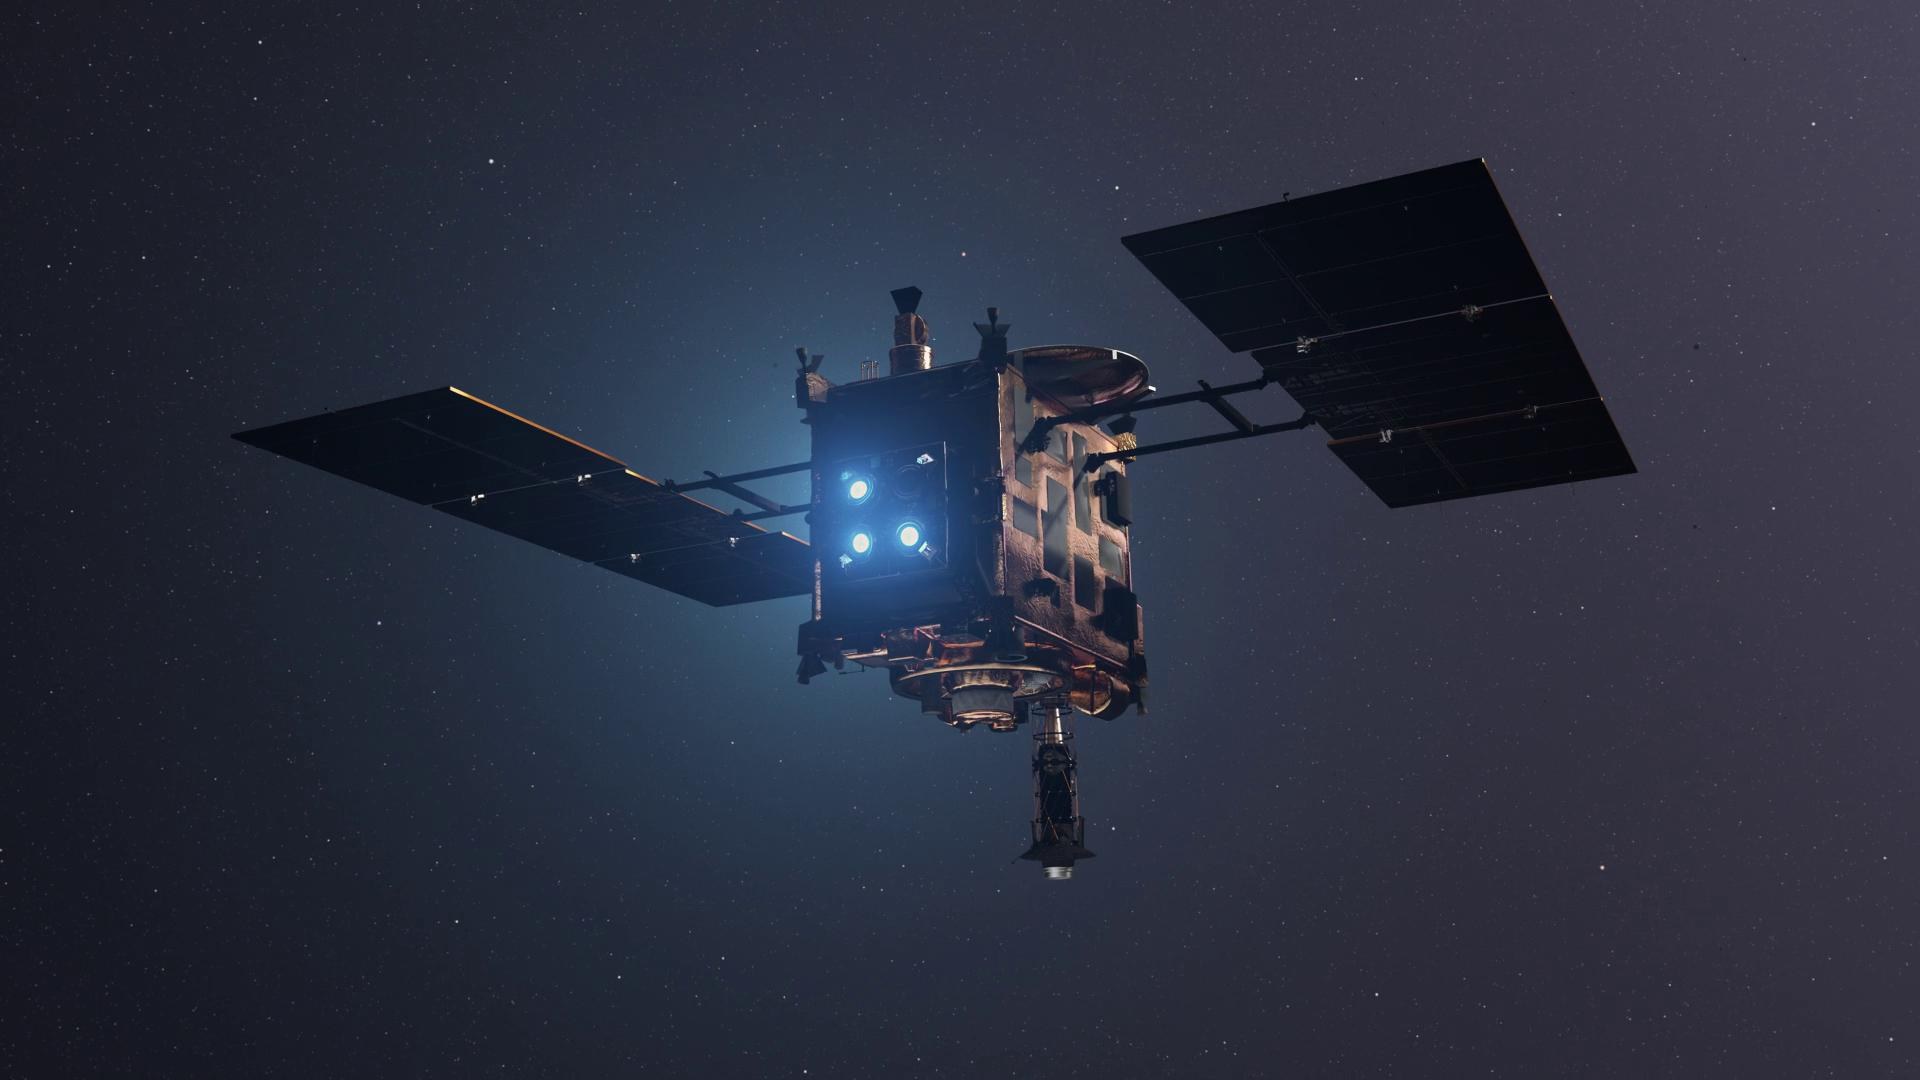 DLR - Startbild - Animation: Asteroidenlander MASCOT auf Hayabusa2